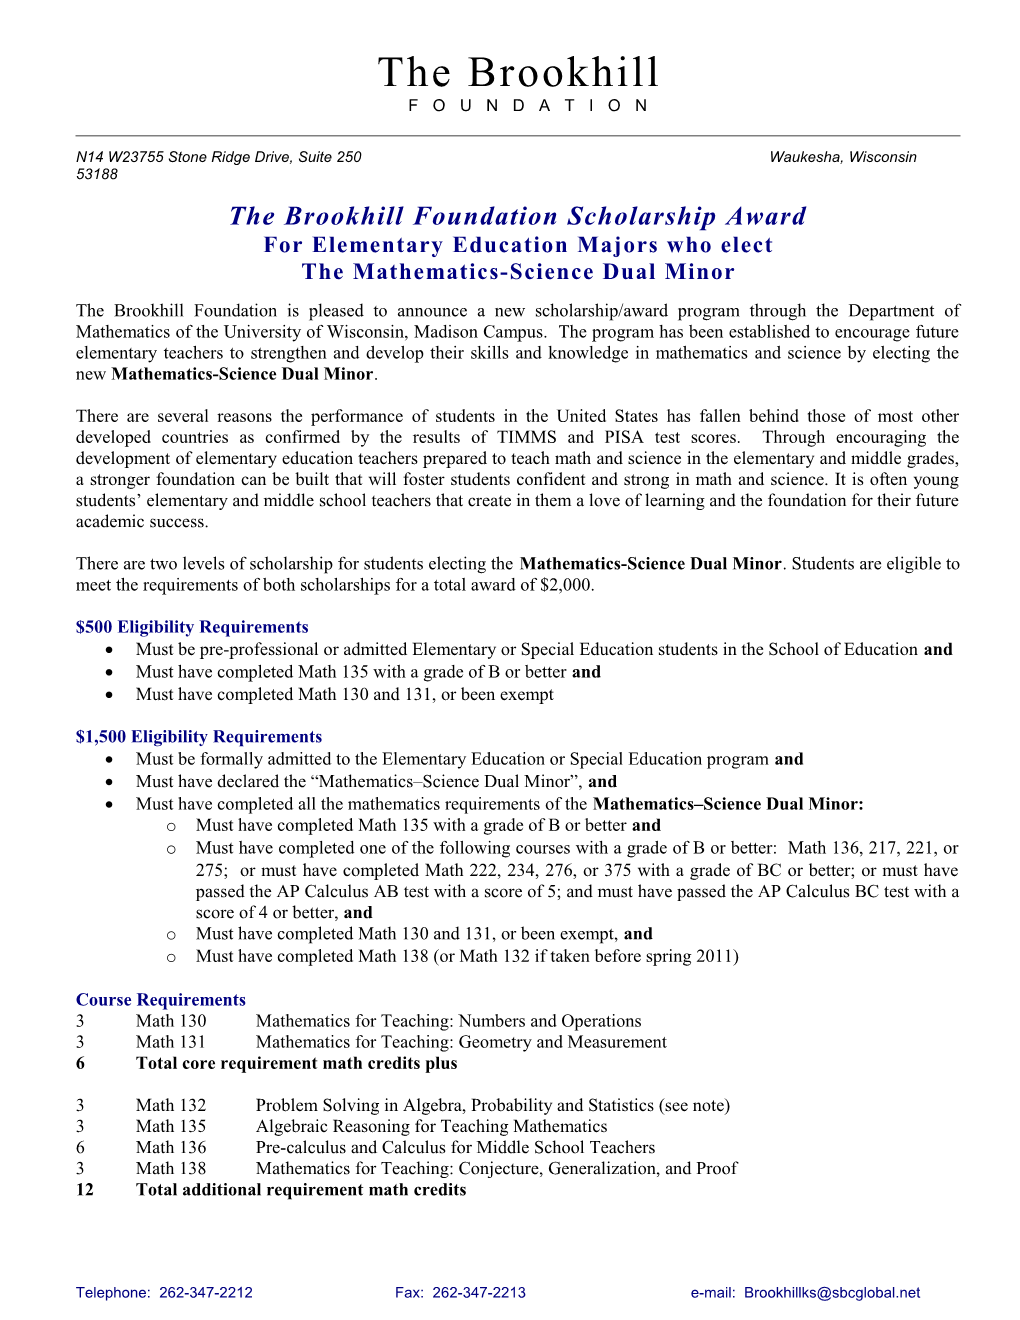 The Brookhill Foundation Scholarship Award